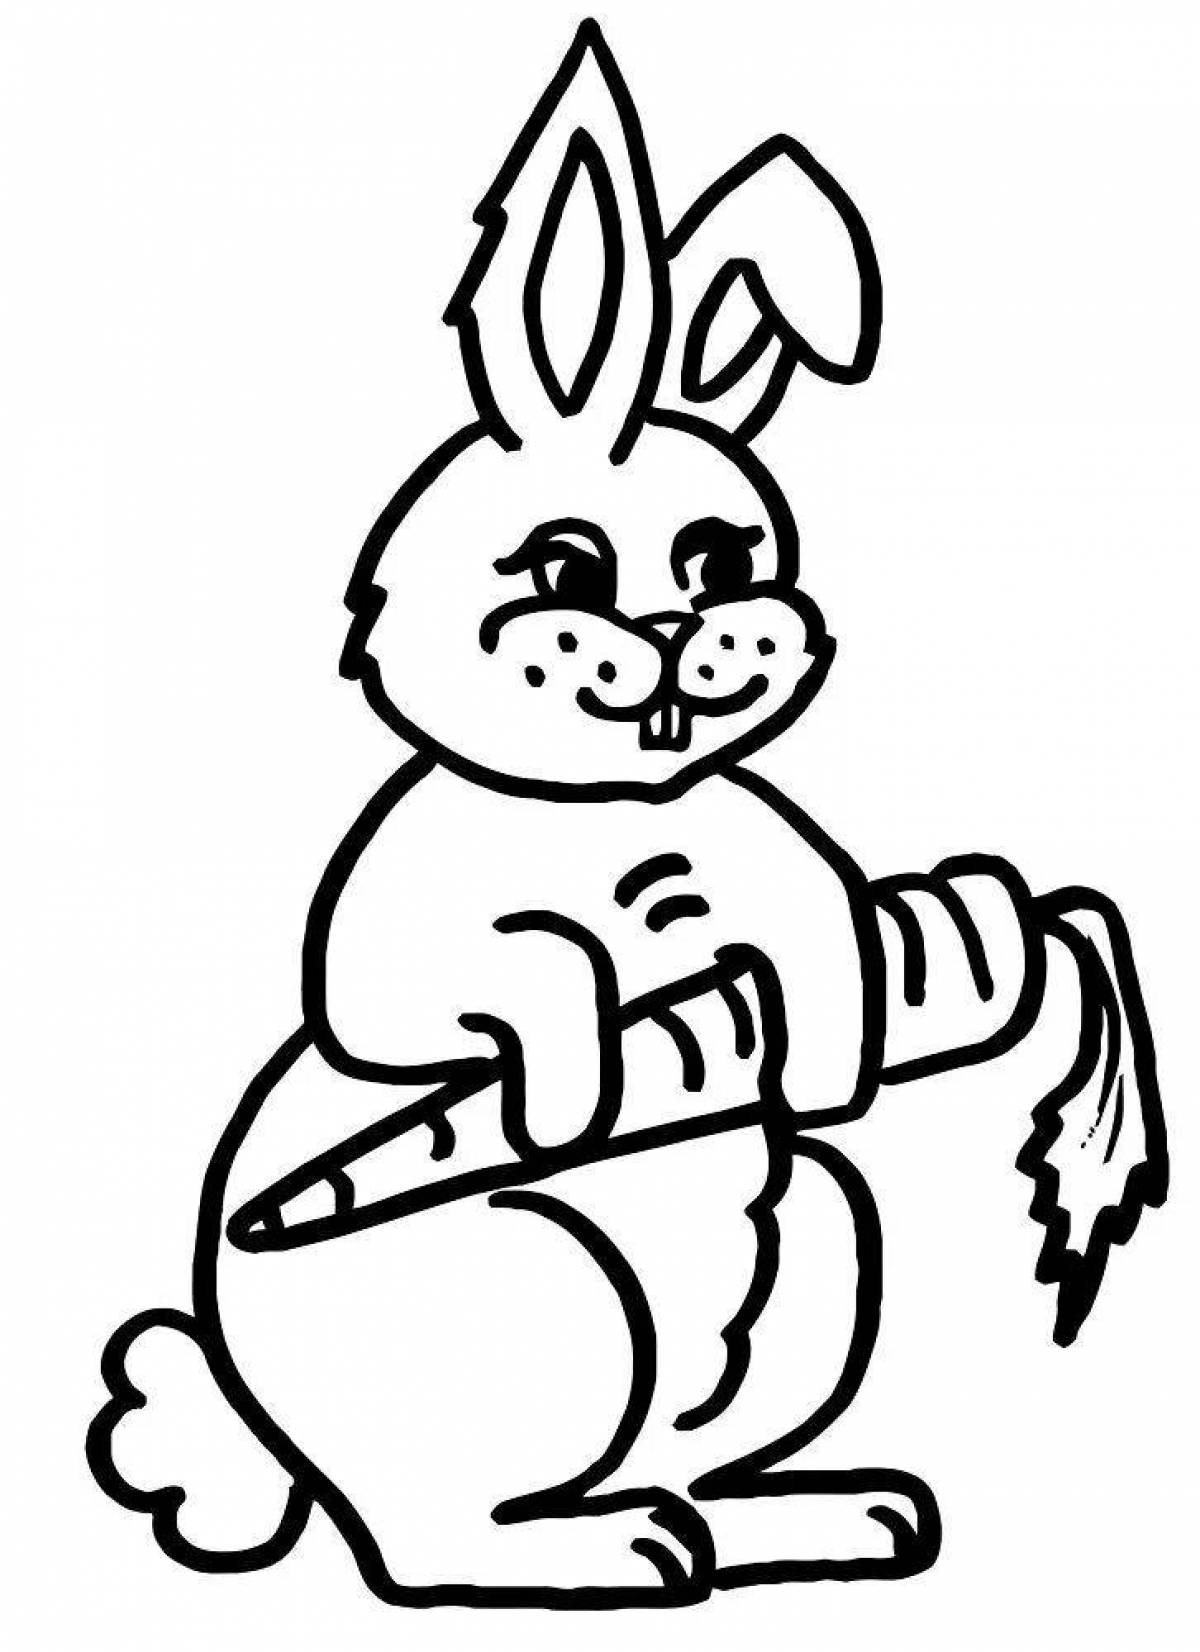 Joyful coloring rabbit with carrots